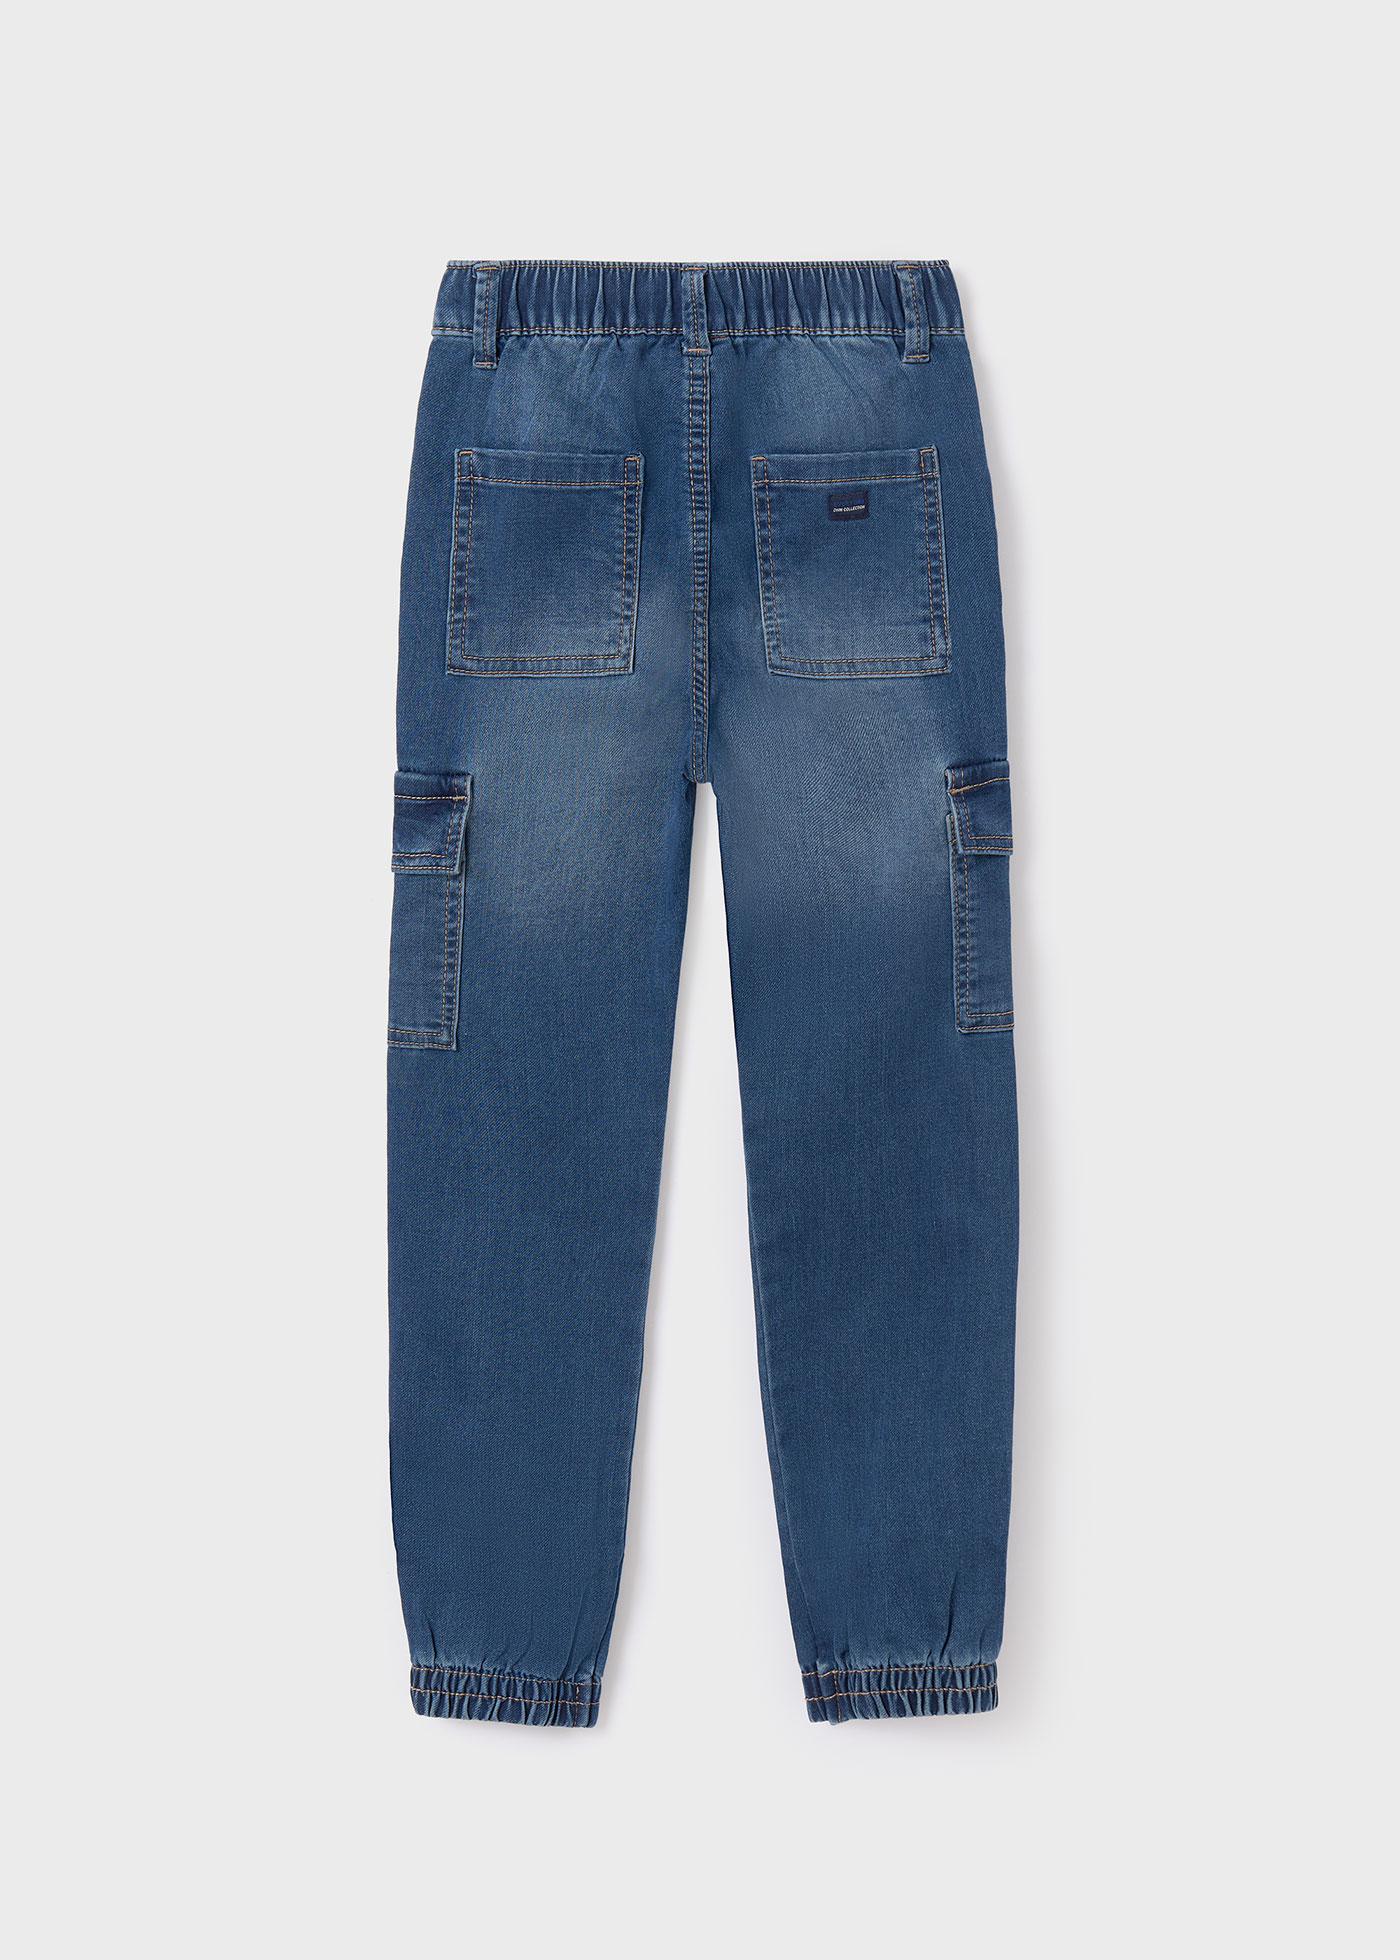 H&M Denim Cargo Jeans for Women